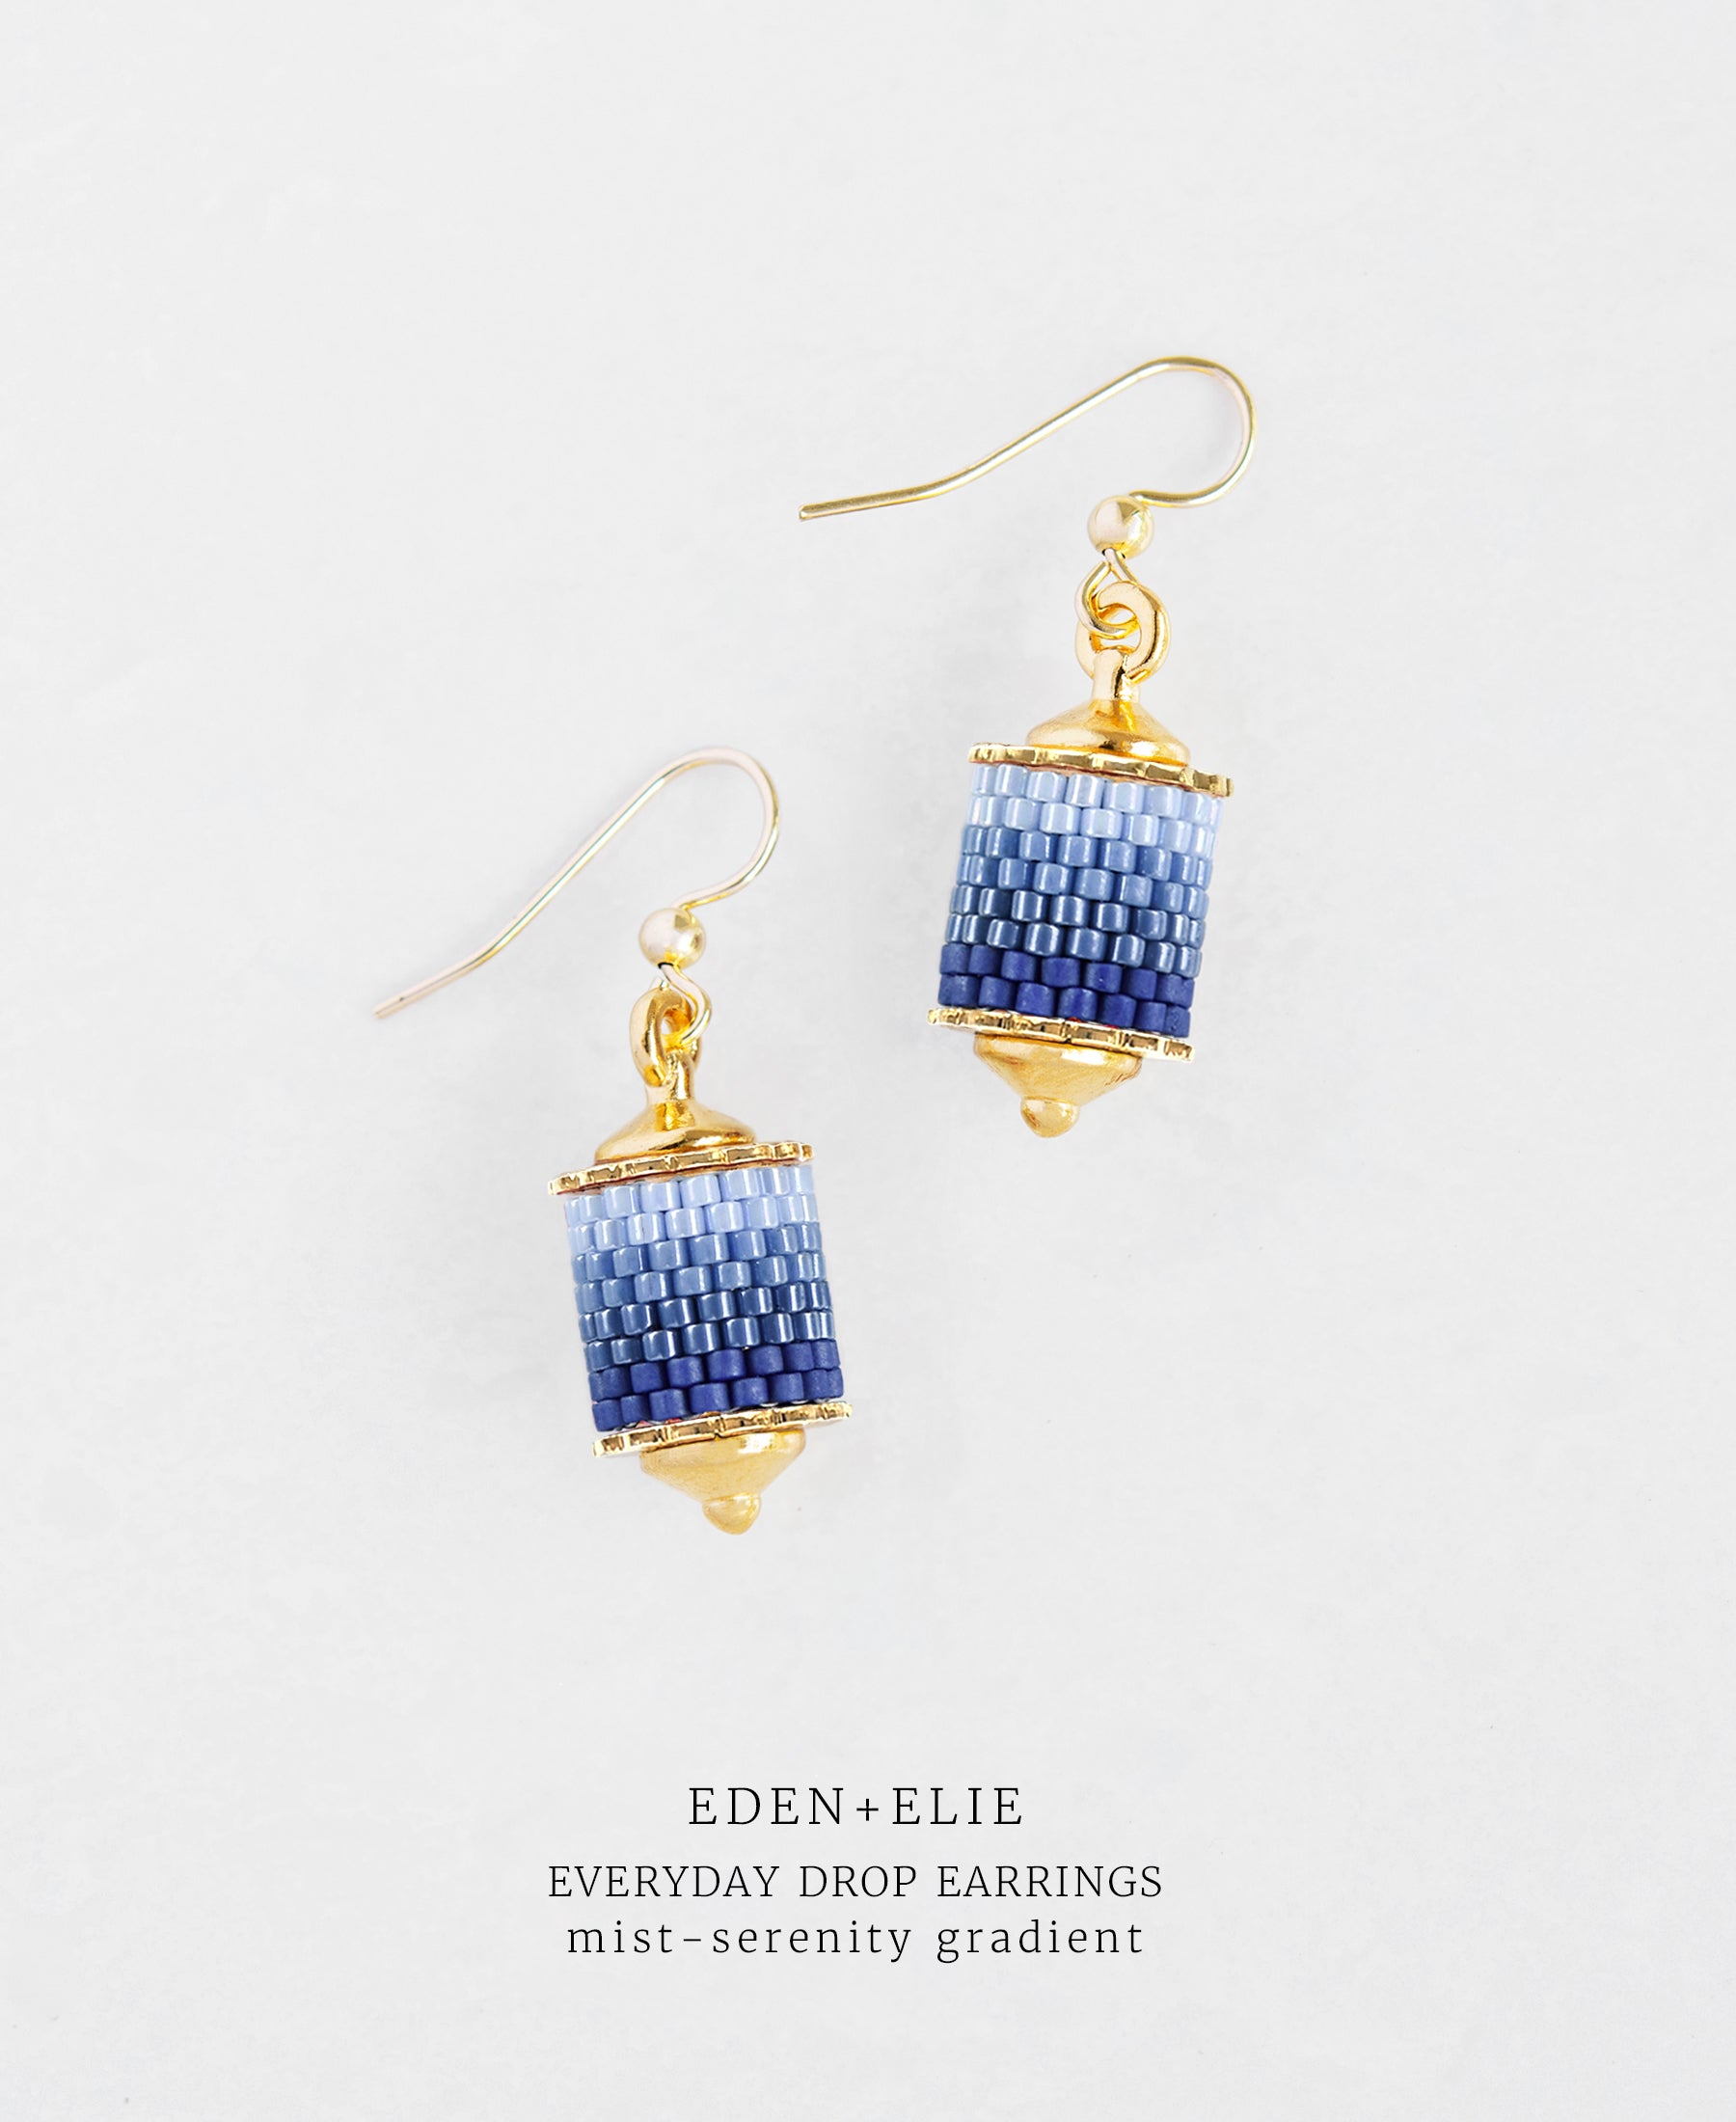 EDEN + ELIE Everyday drop earrings - mist serenity gradient